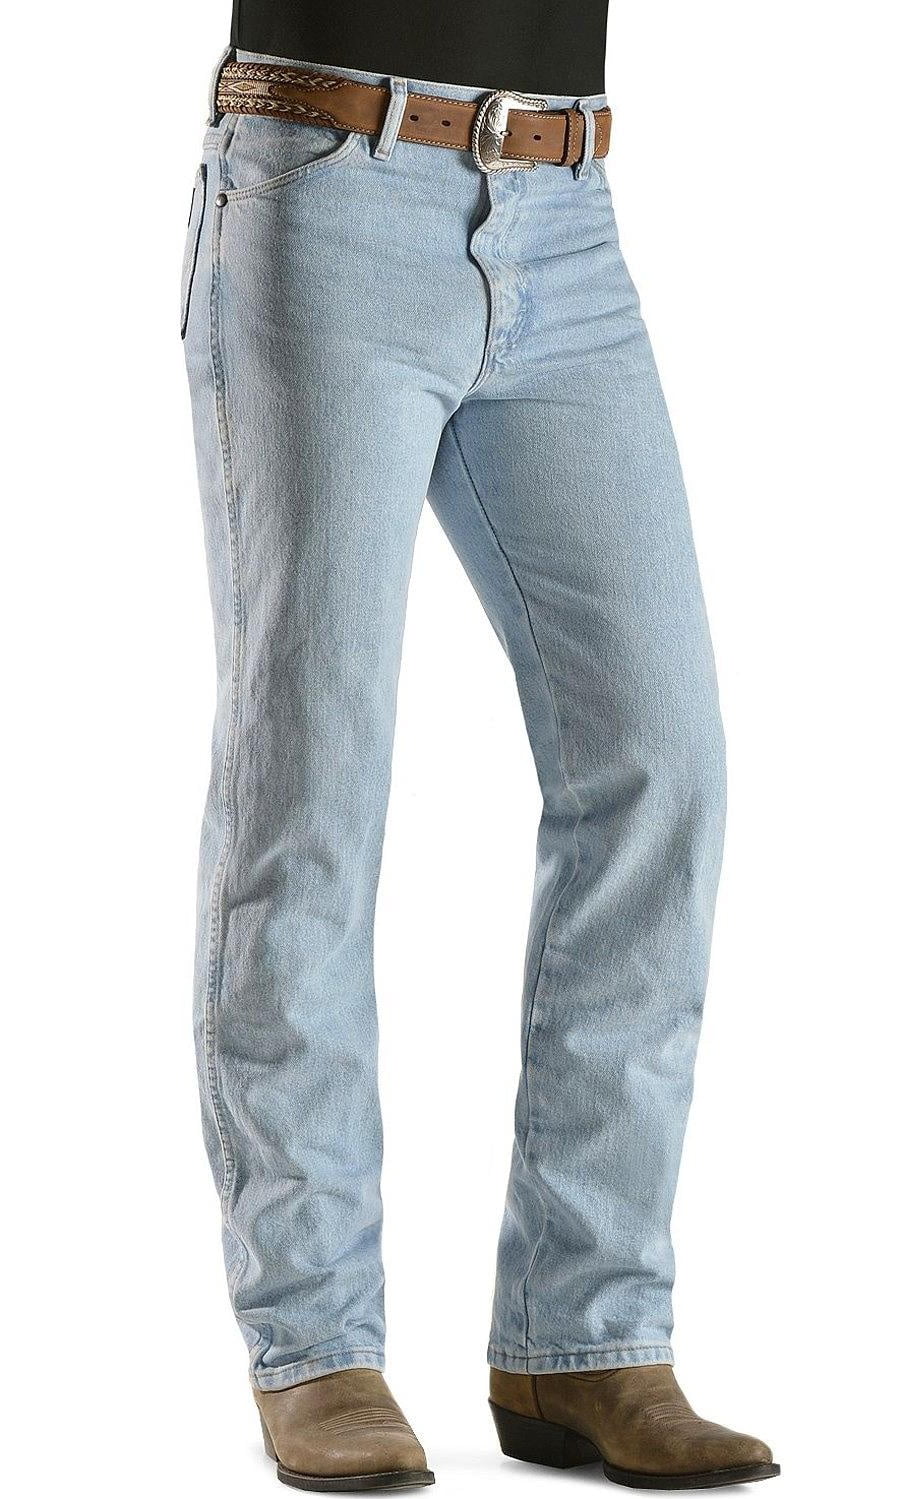 wrangler men's jeans 936 slim fit premium wash - 0936rst_x1 